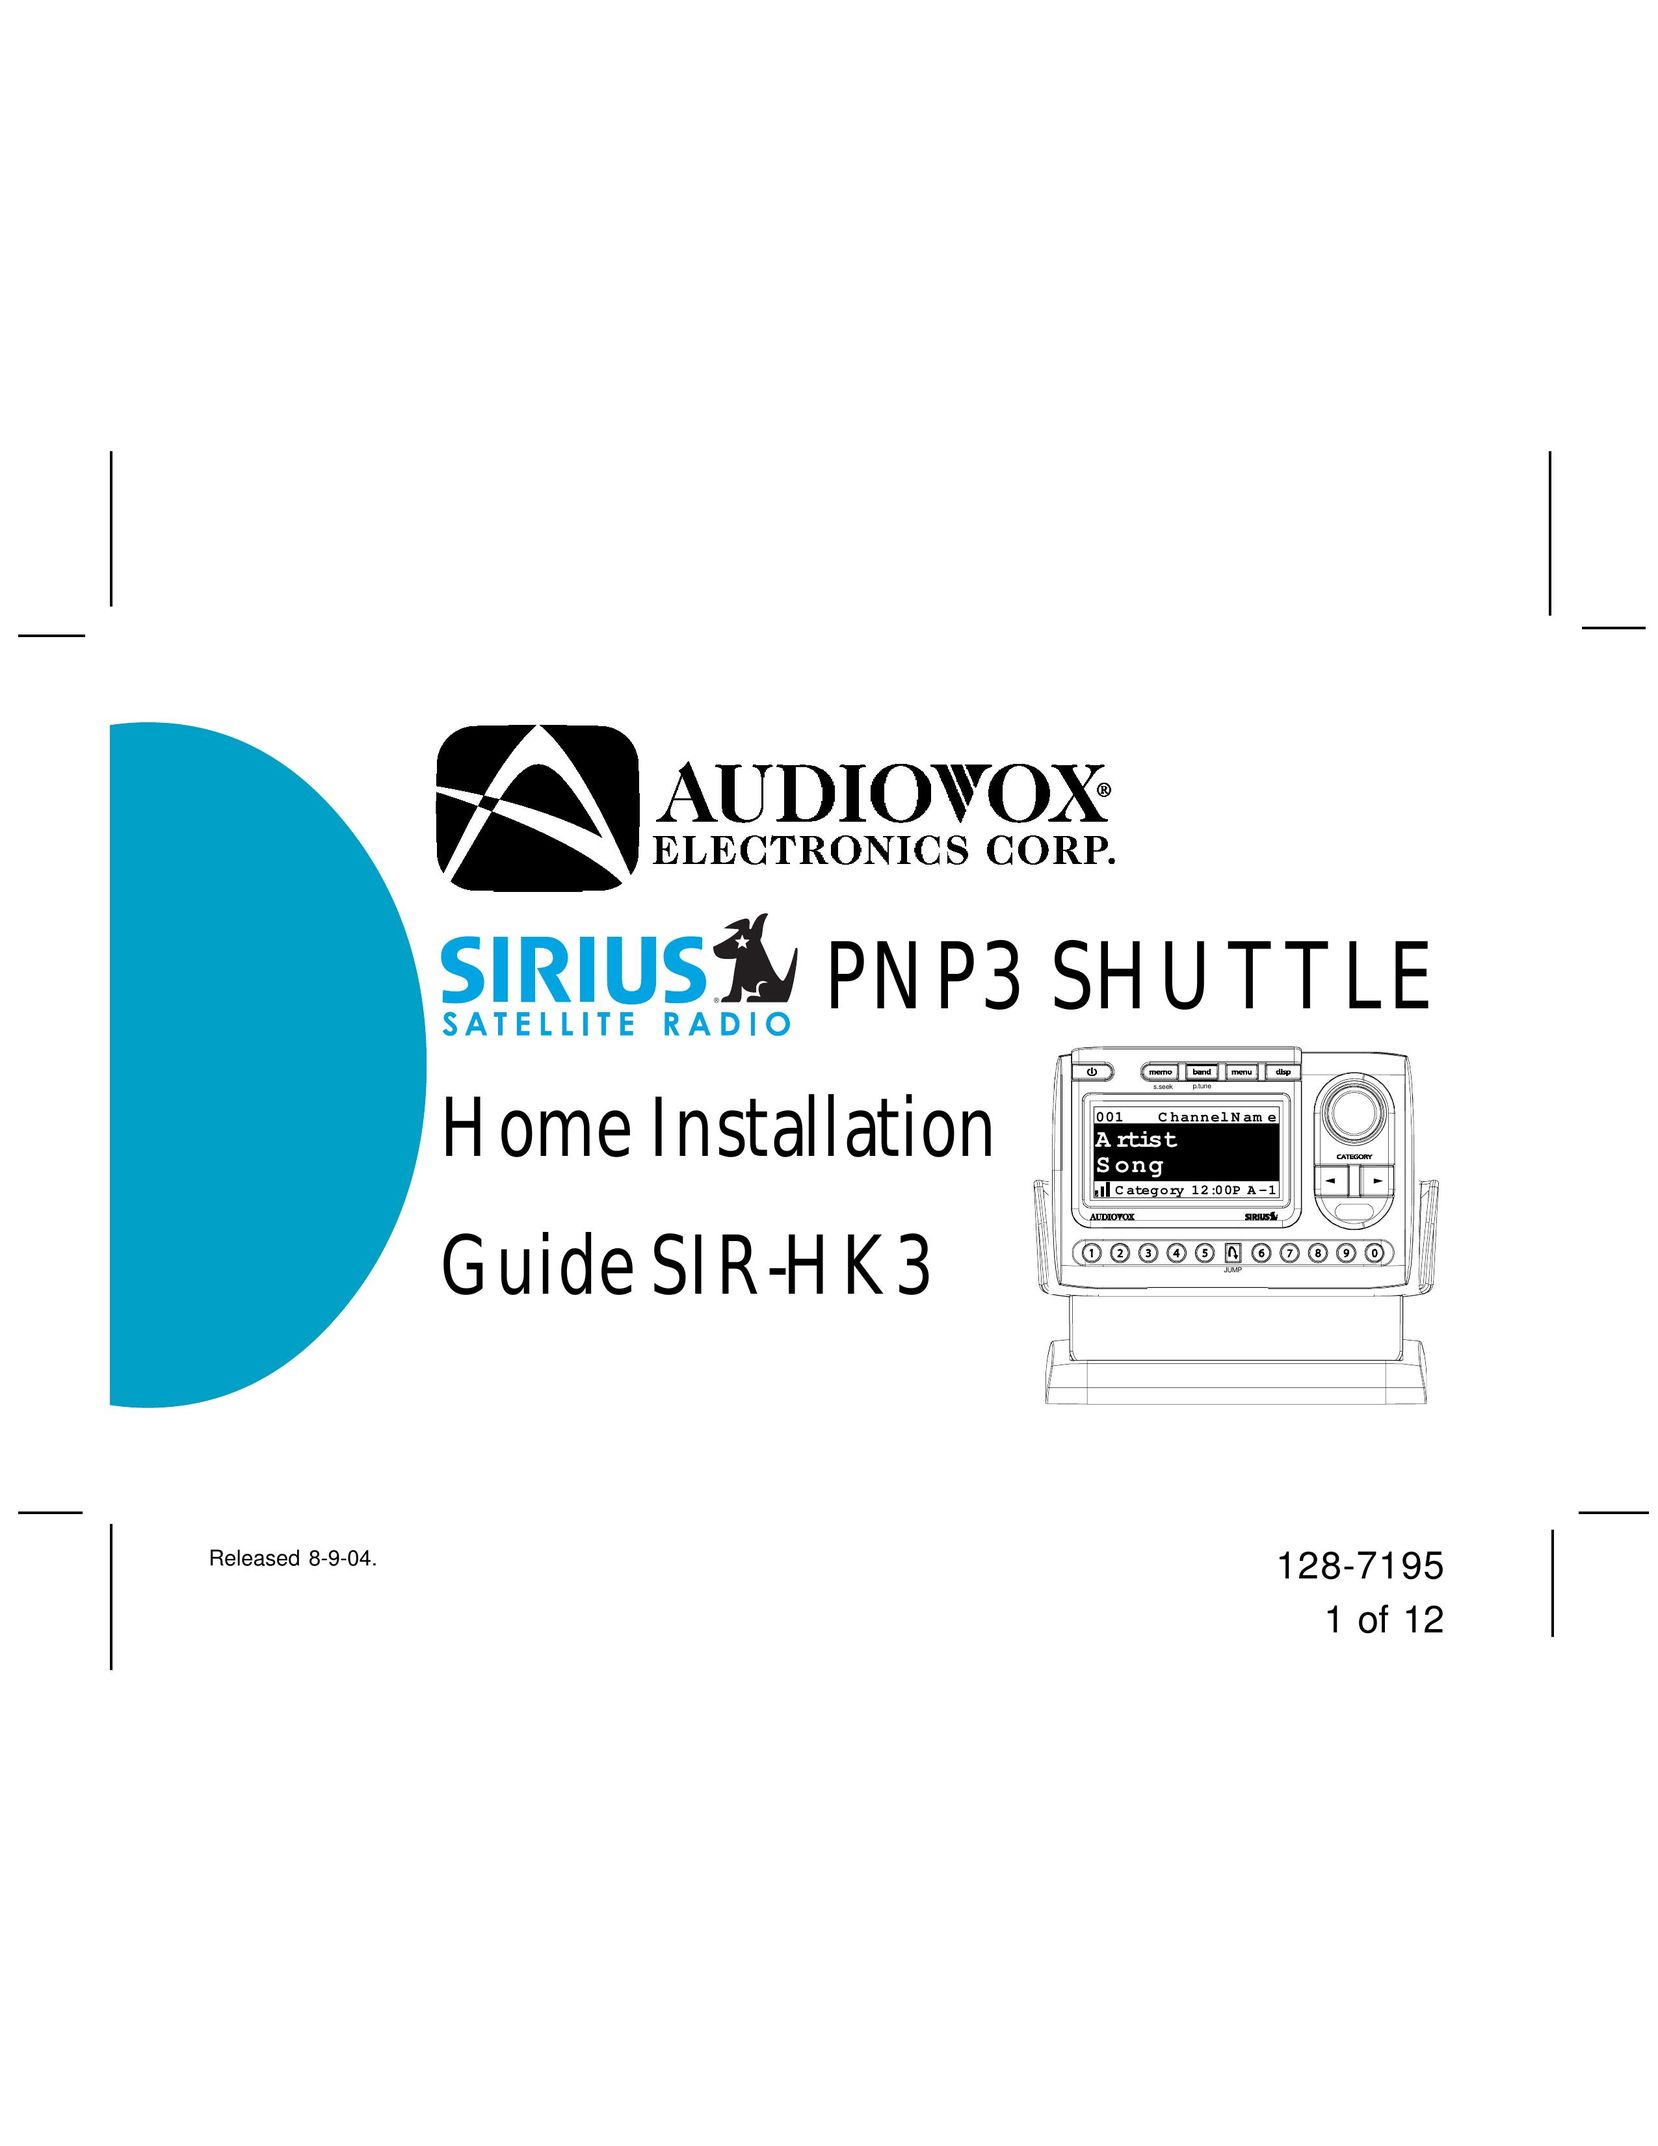 Audiovox SIR-HK3 Satellite Radio User Manual